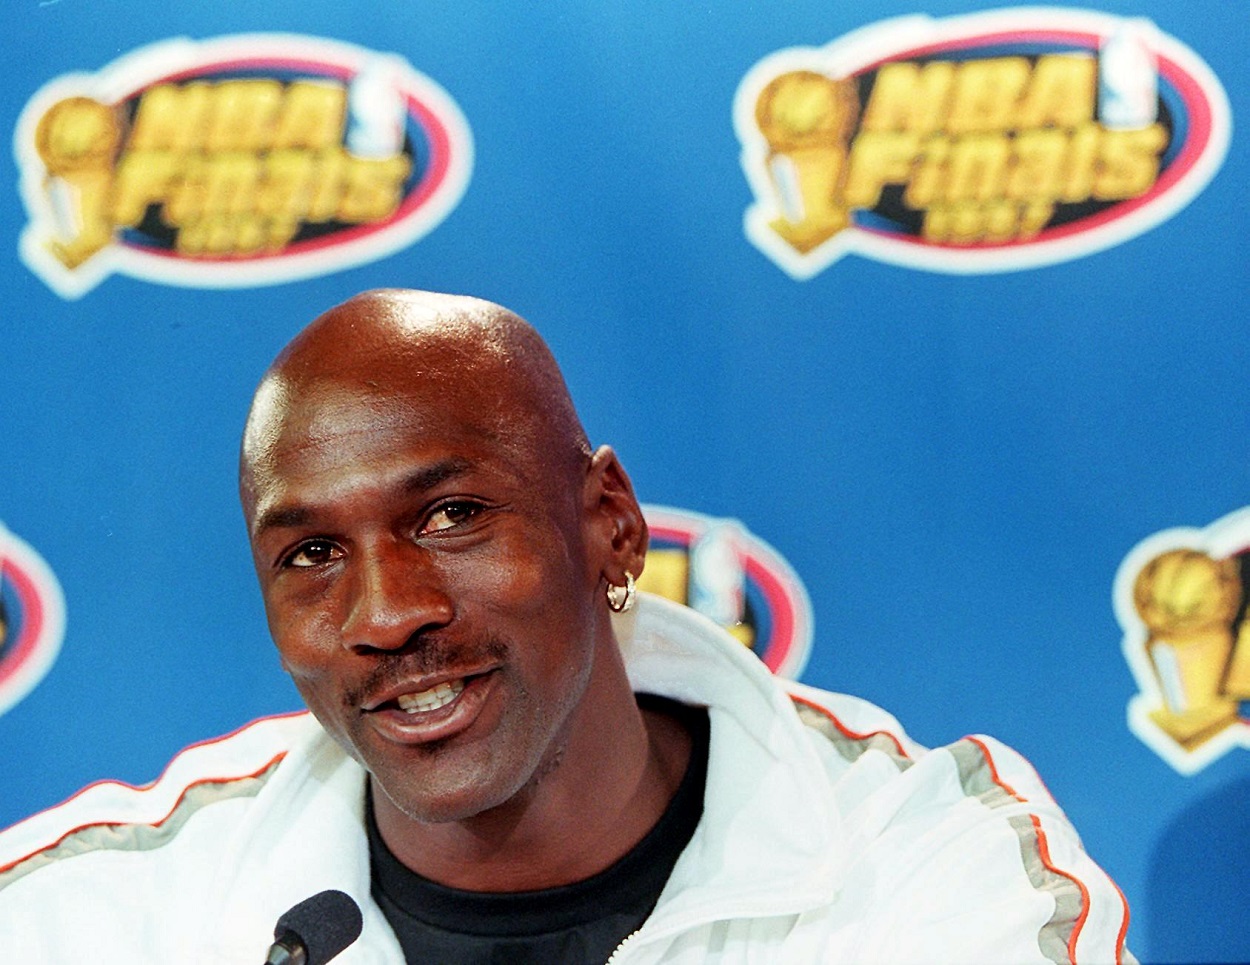 Michael Jordan during the 1997 NBA Finals